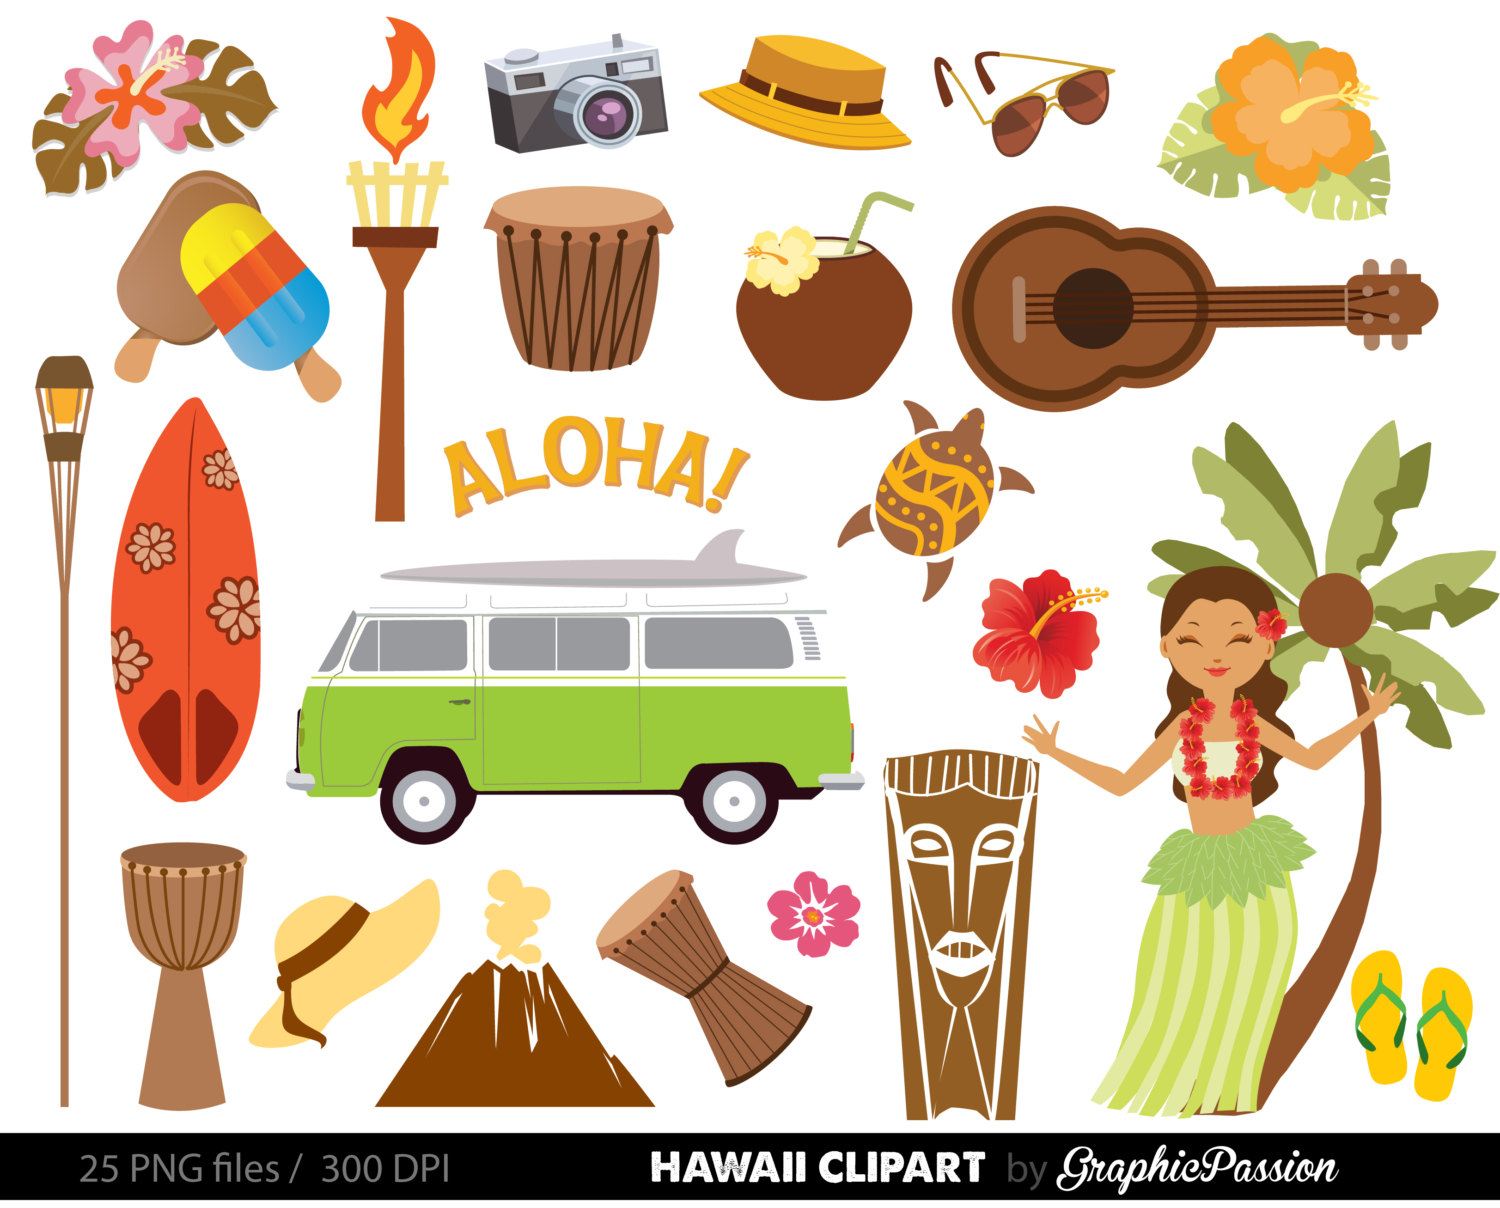 Hawaiian Luau Party clip art Luau clipart Luau by GraphicPassion 